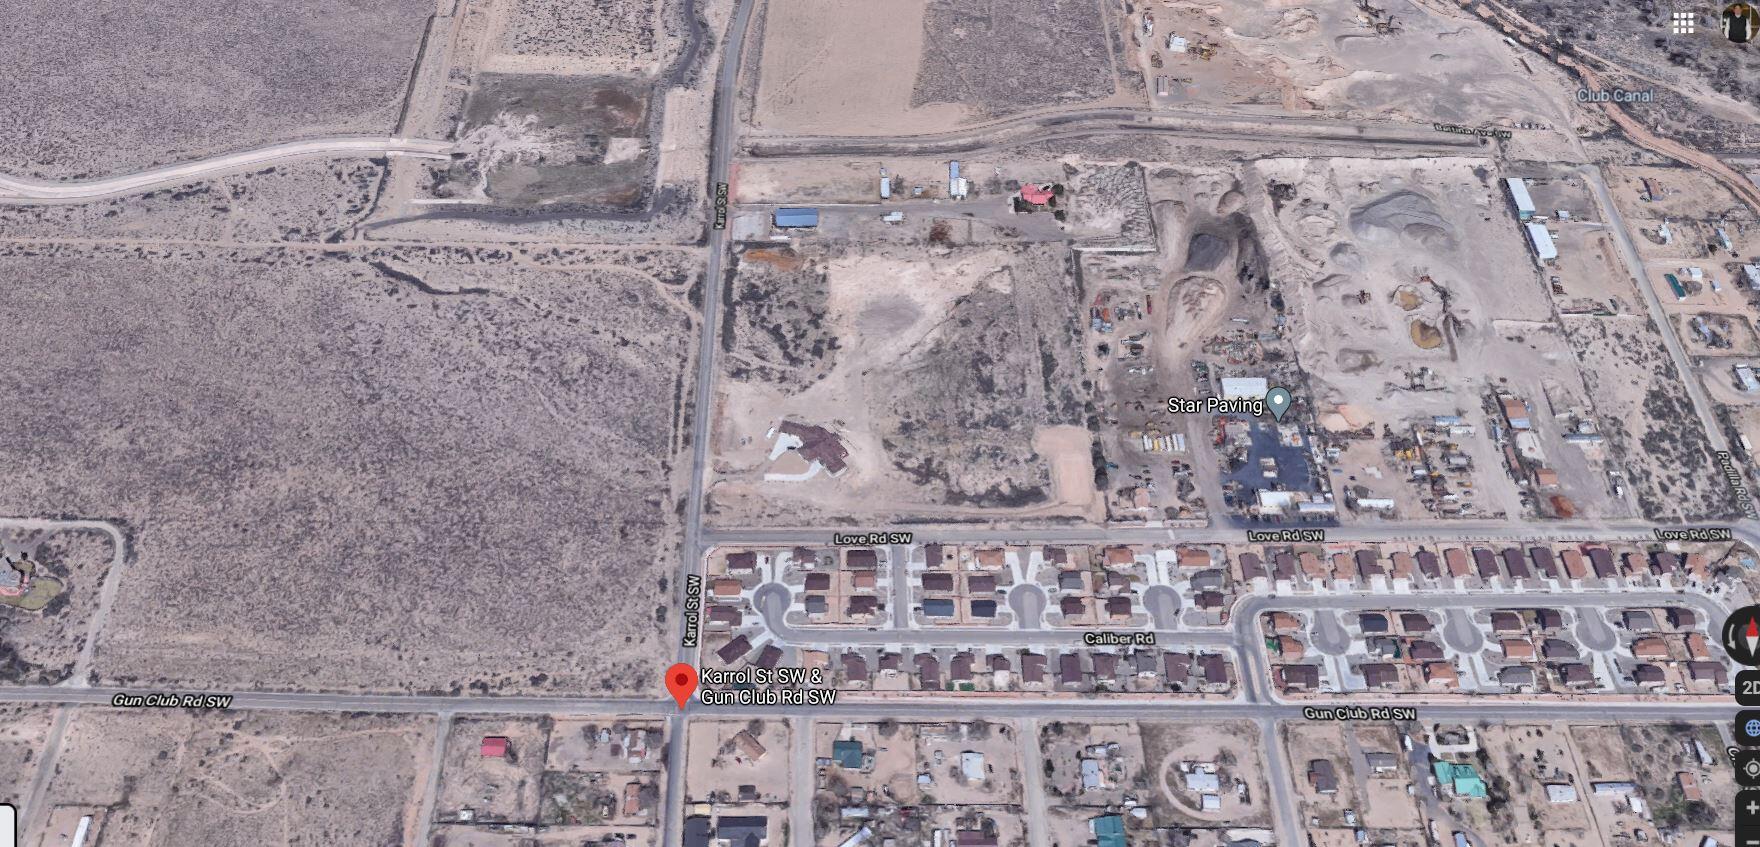 8 Acres On Karrol Road SW, Albuquerque, New Mexico 87121, ,Land,For Sale,8 Acres On Karrol Road SW,1042458